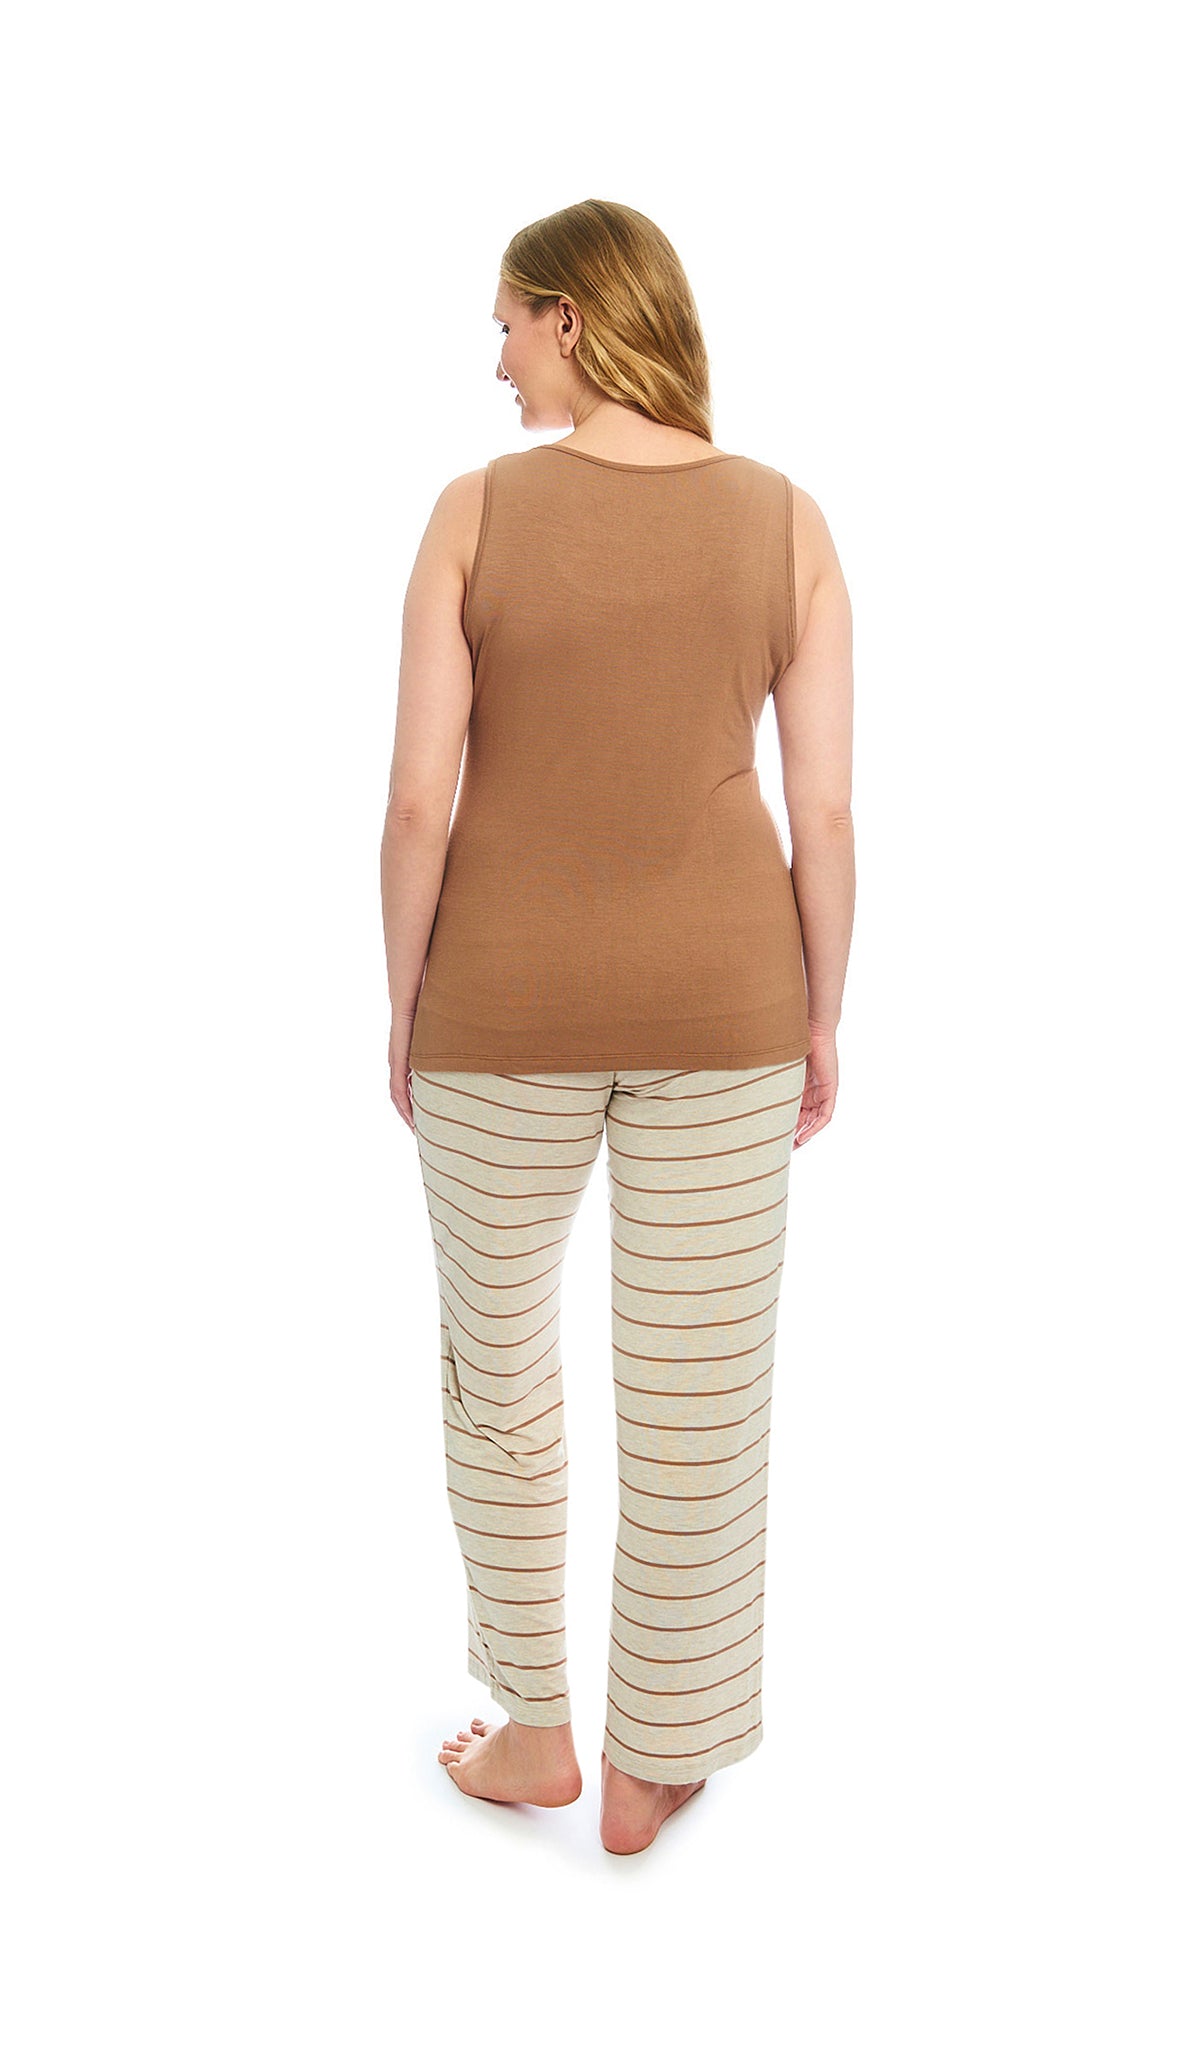 Mocha Stripe Analise 5-Piece Set, back shot of woman wearing tank top and pant.